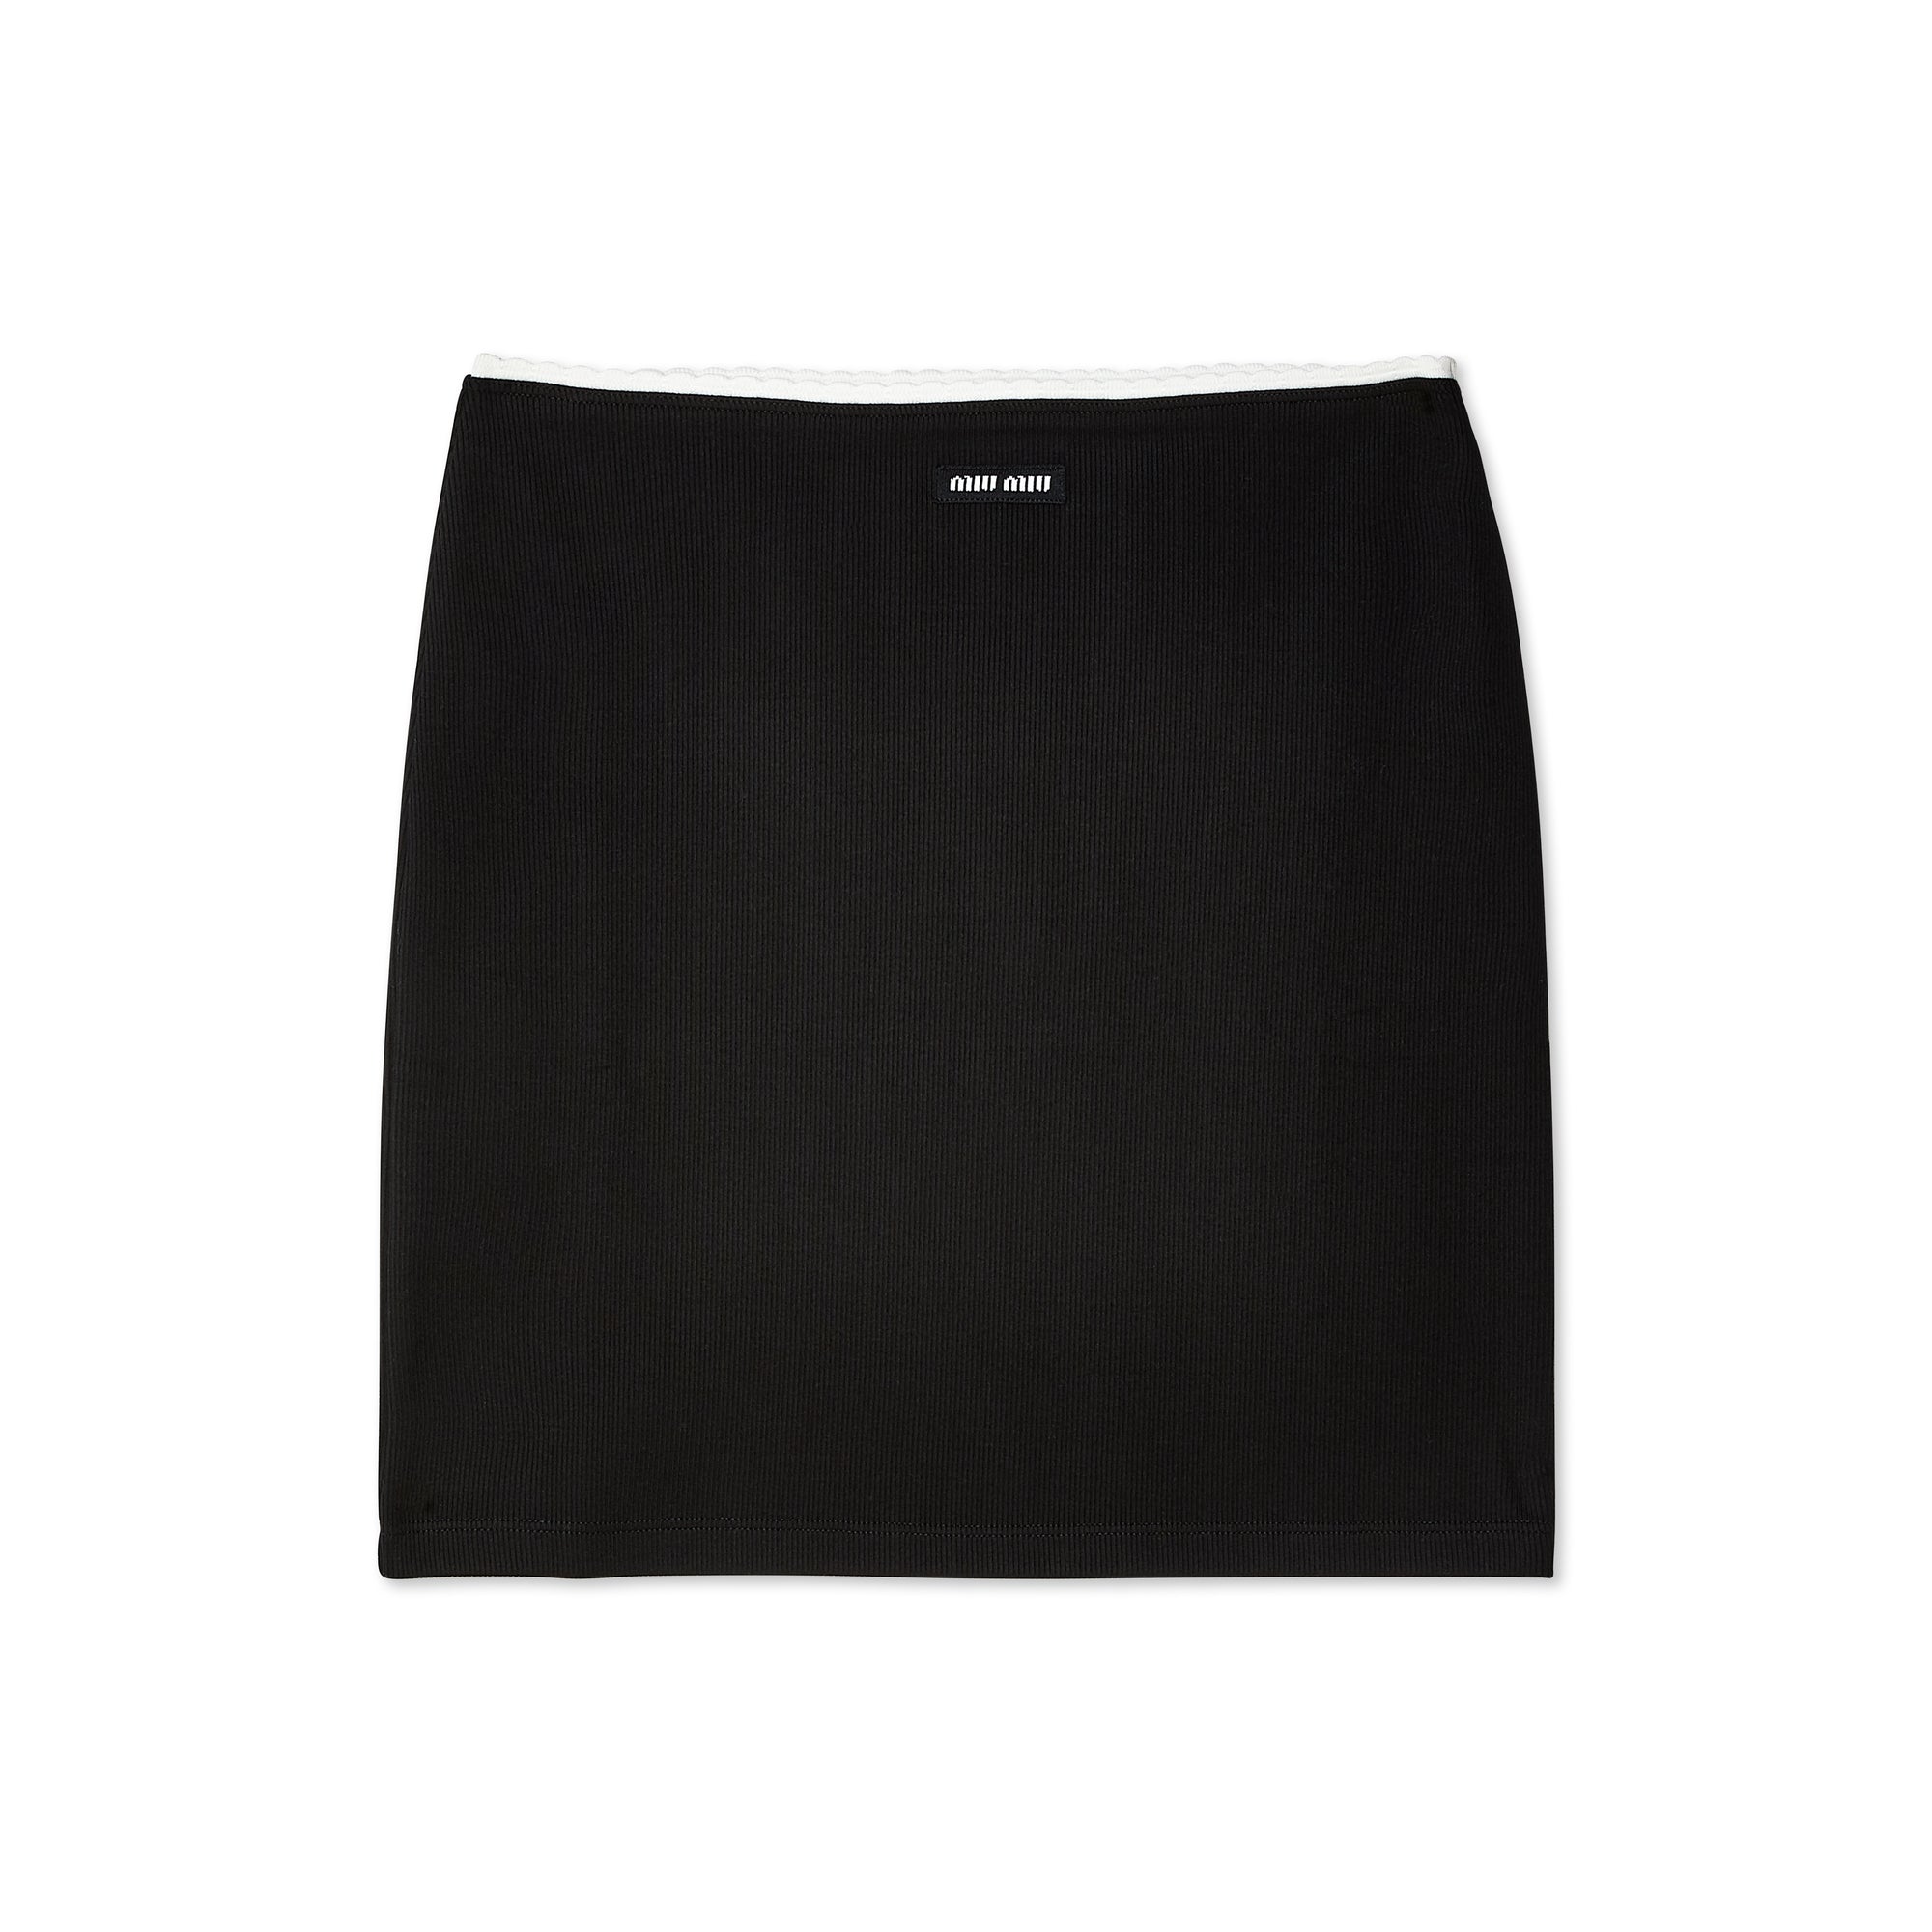 Miu Miu - Women's Skirt - (Black) view 1